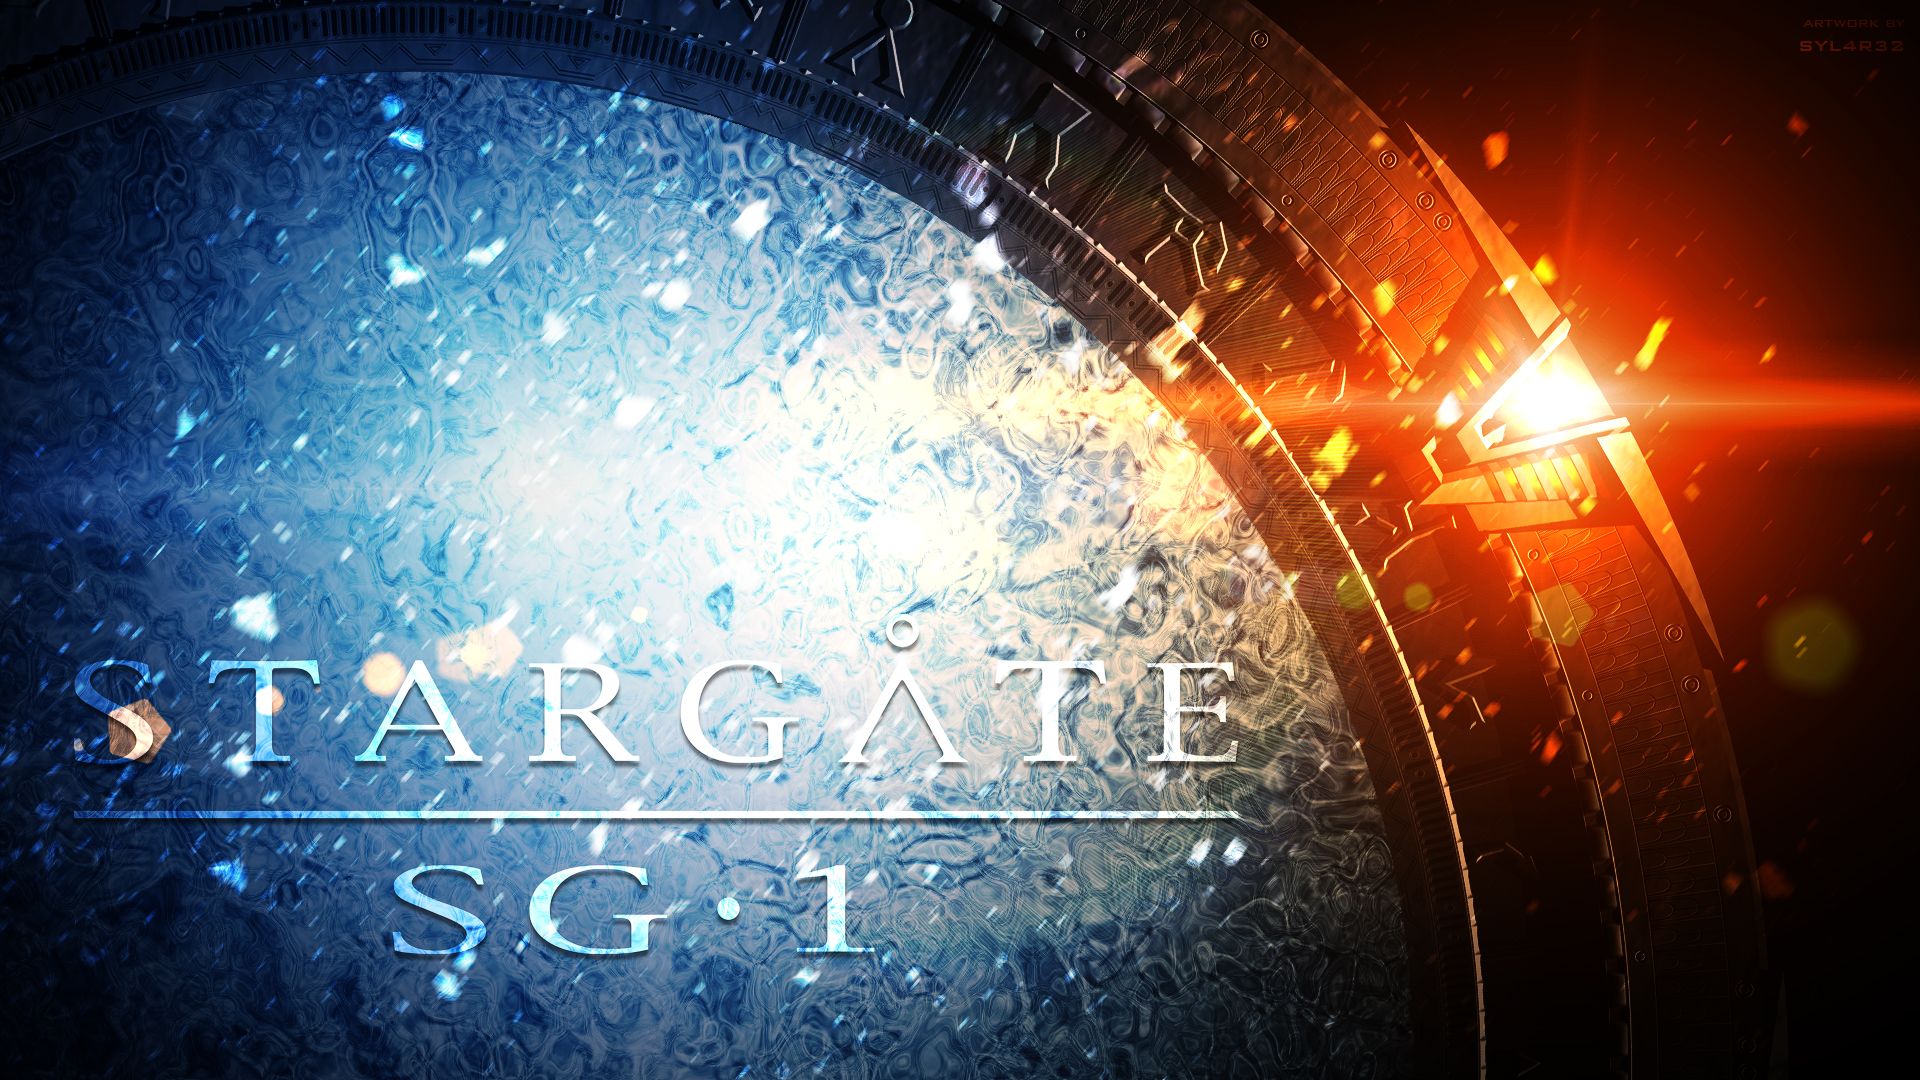 Stargate SG 1 Title Wallpaper by SYL4R32 on DeviantArt